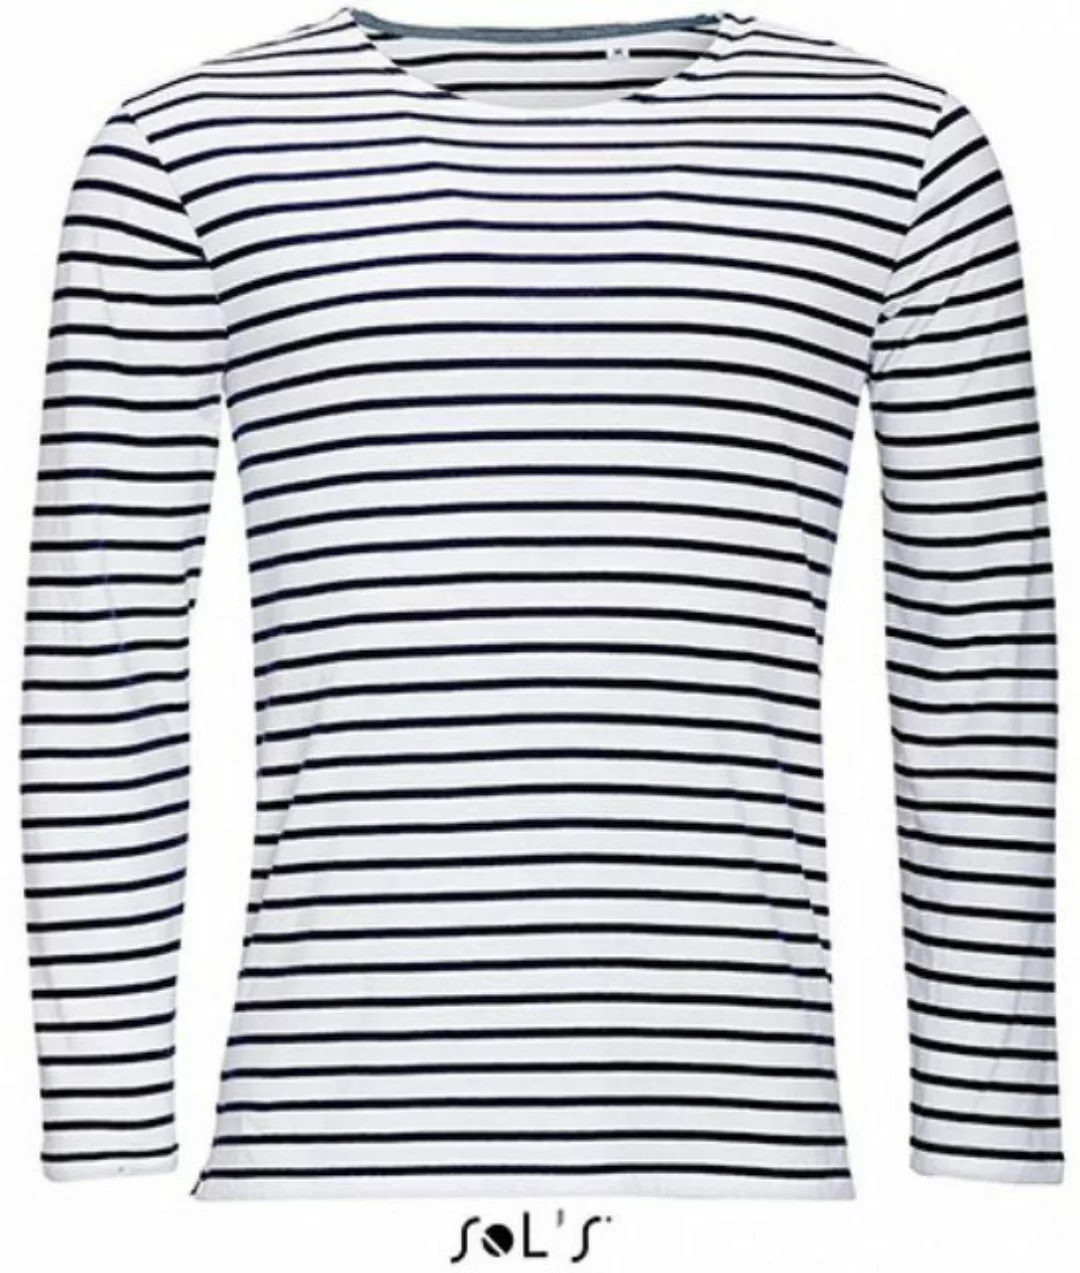 SOLS Langarmshirt Herren Longsleeve Striped T-Shirt Marine gestreift günstig online kaufen